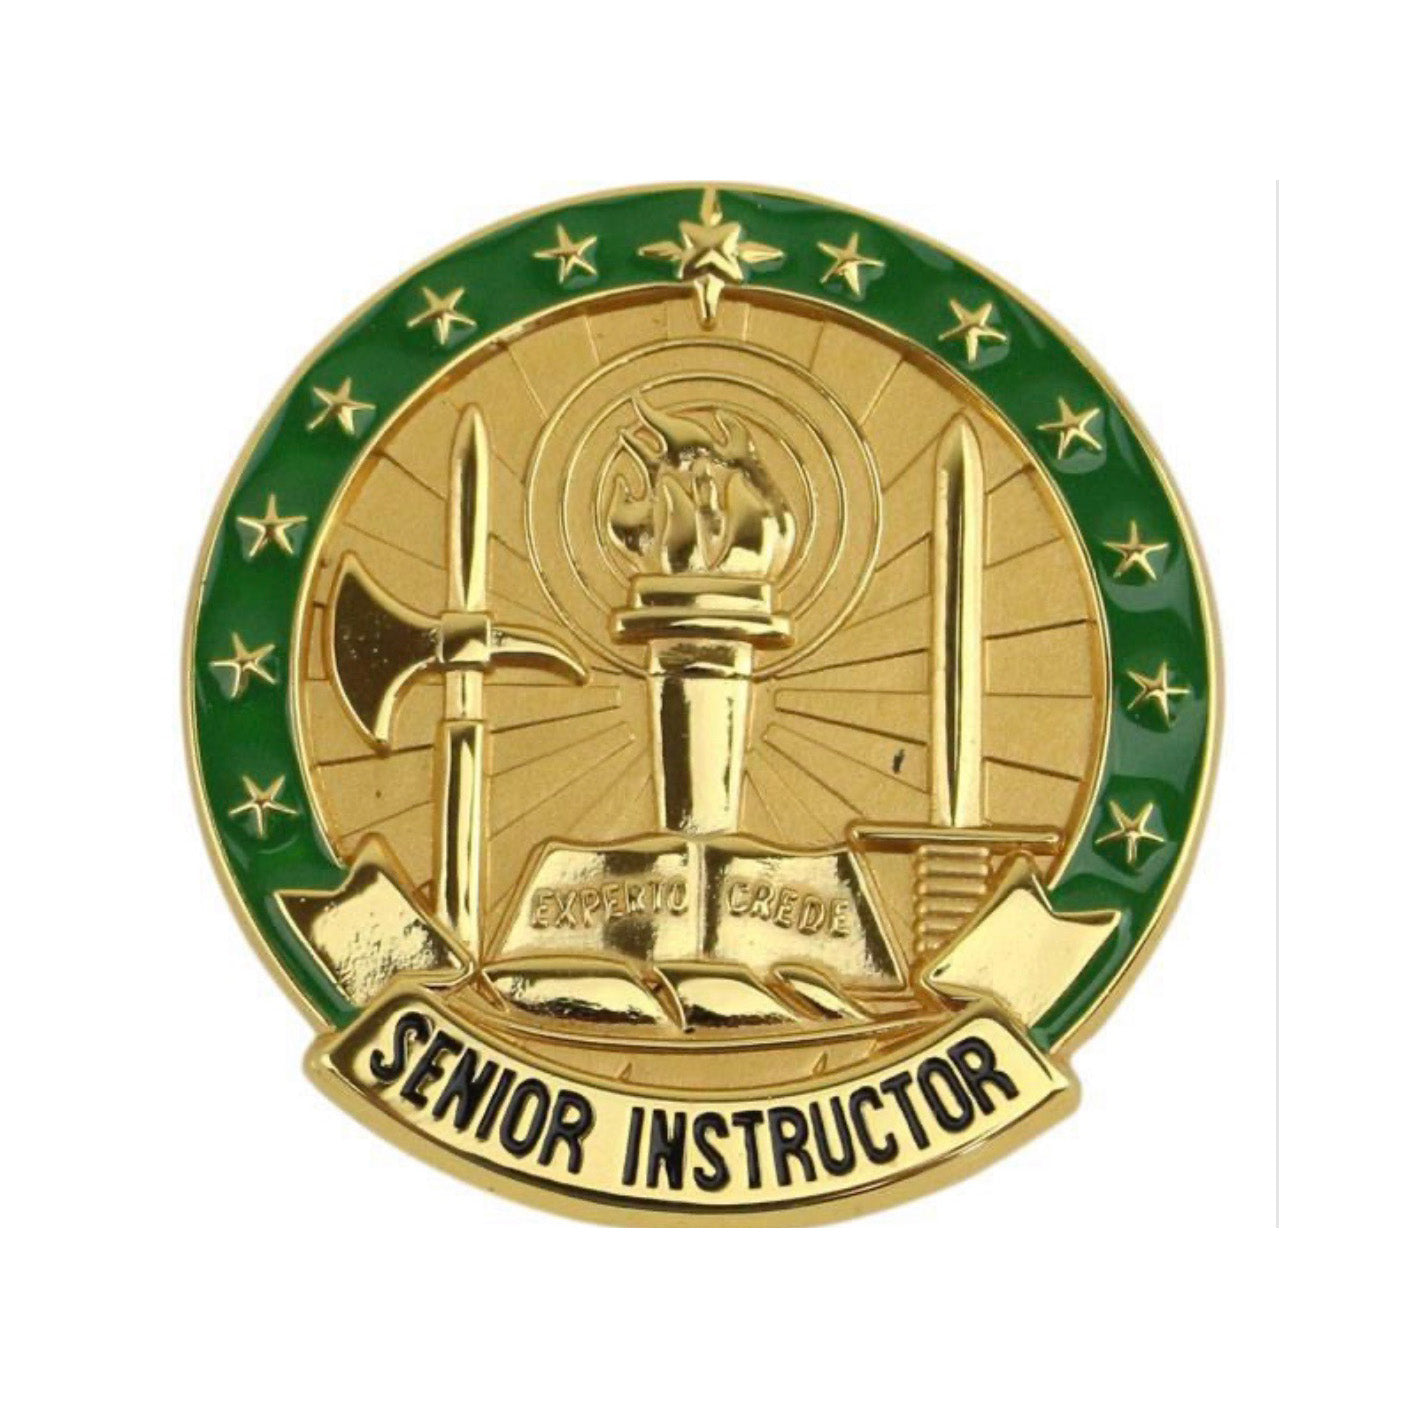 US Army Instructor Senior STA-BRITE®